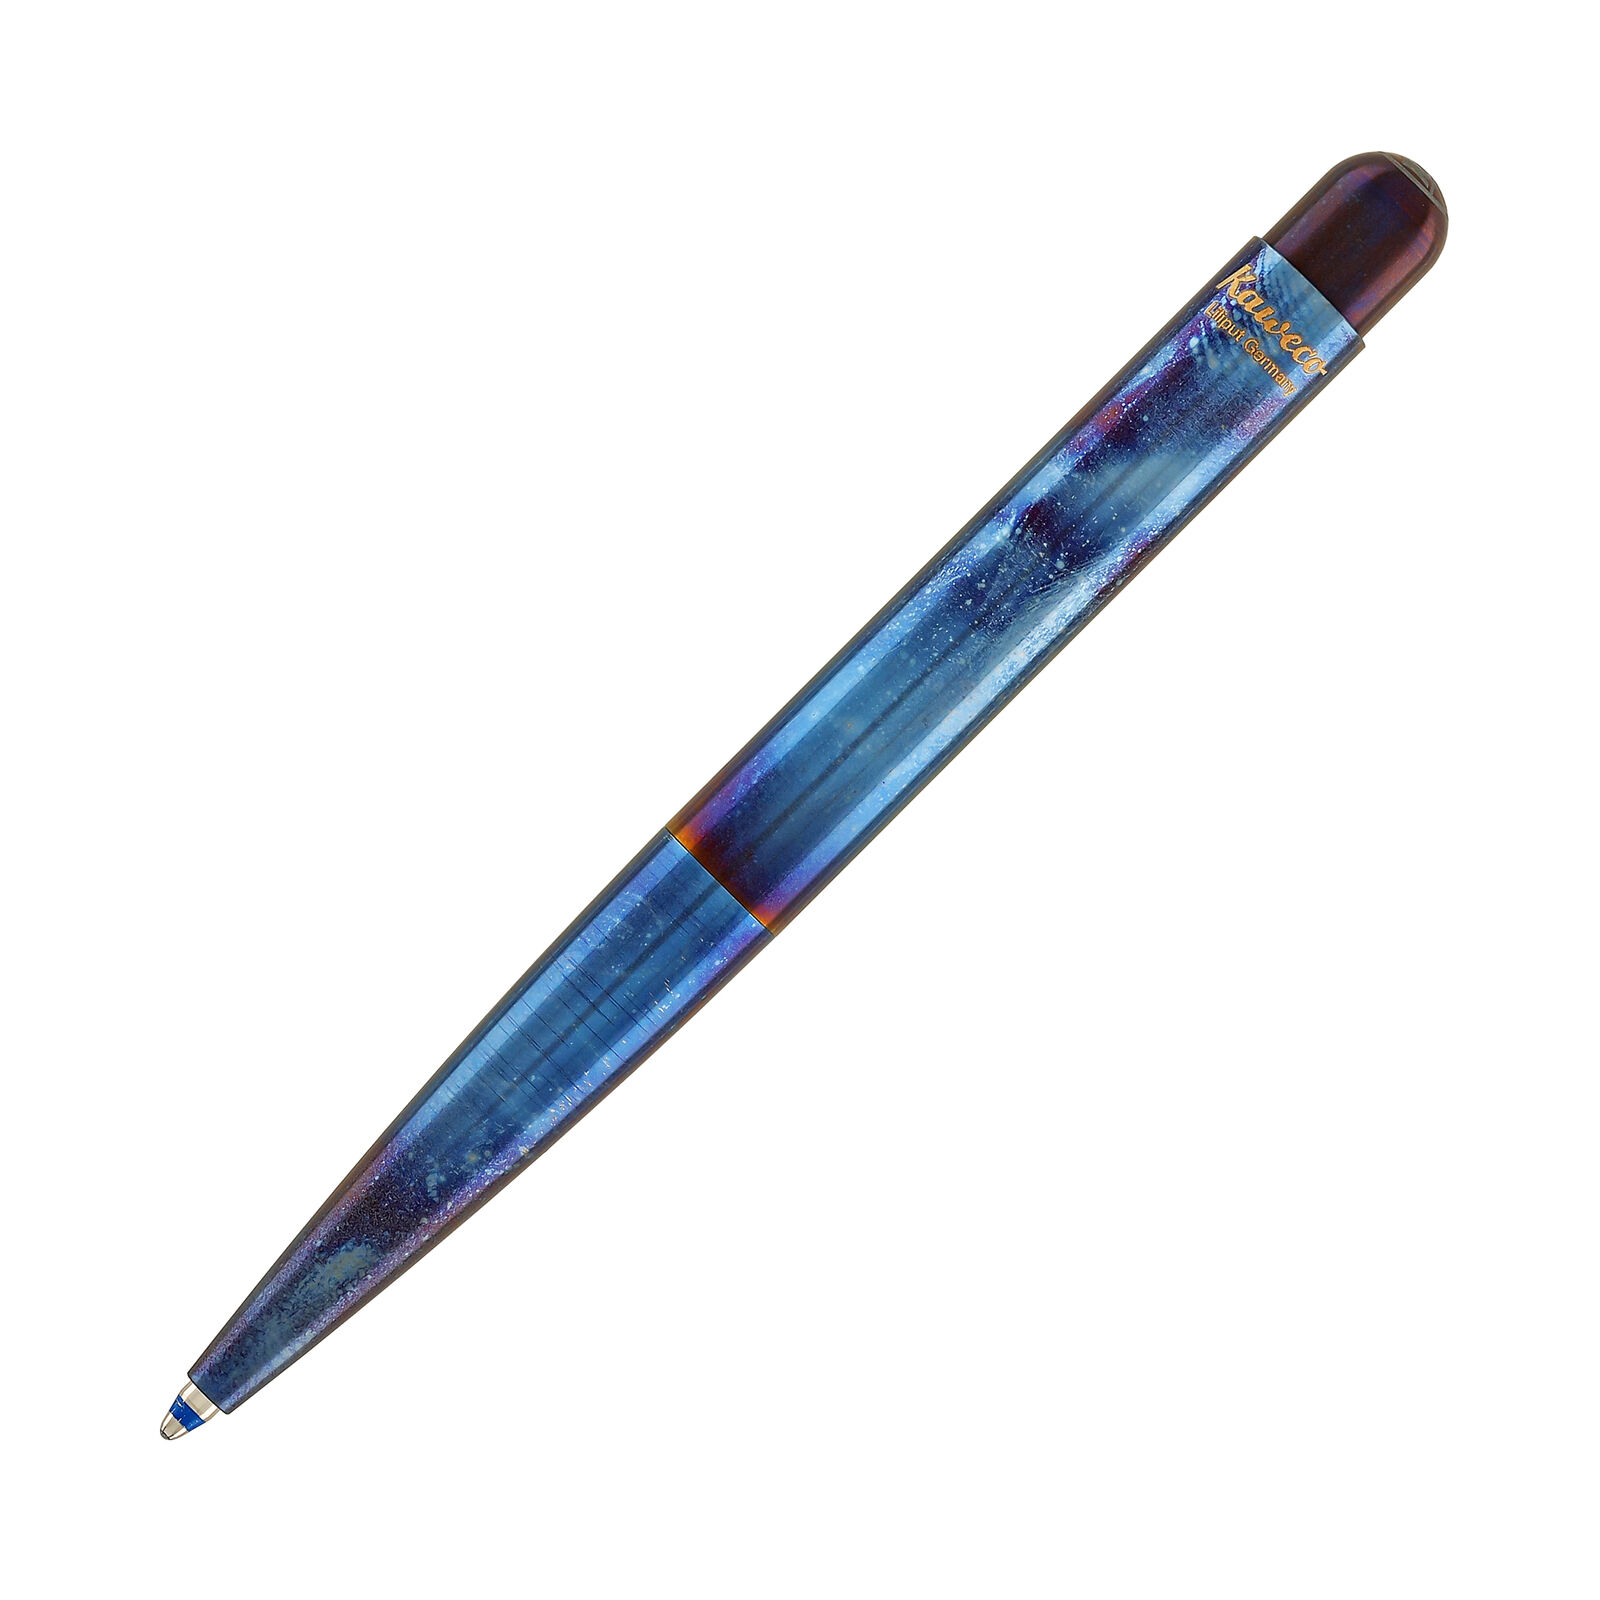 Kaweco Liliput Ballpoint Pen in Fireblue - NEW in Original Box